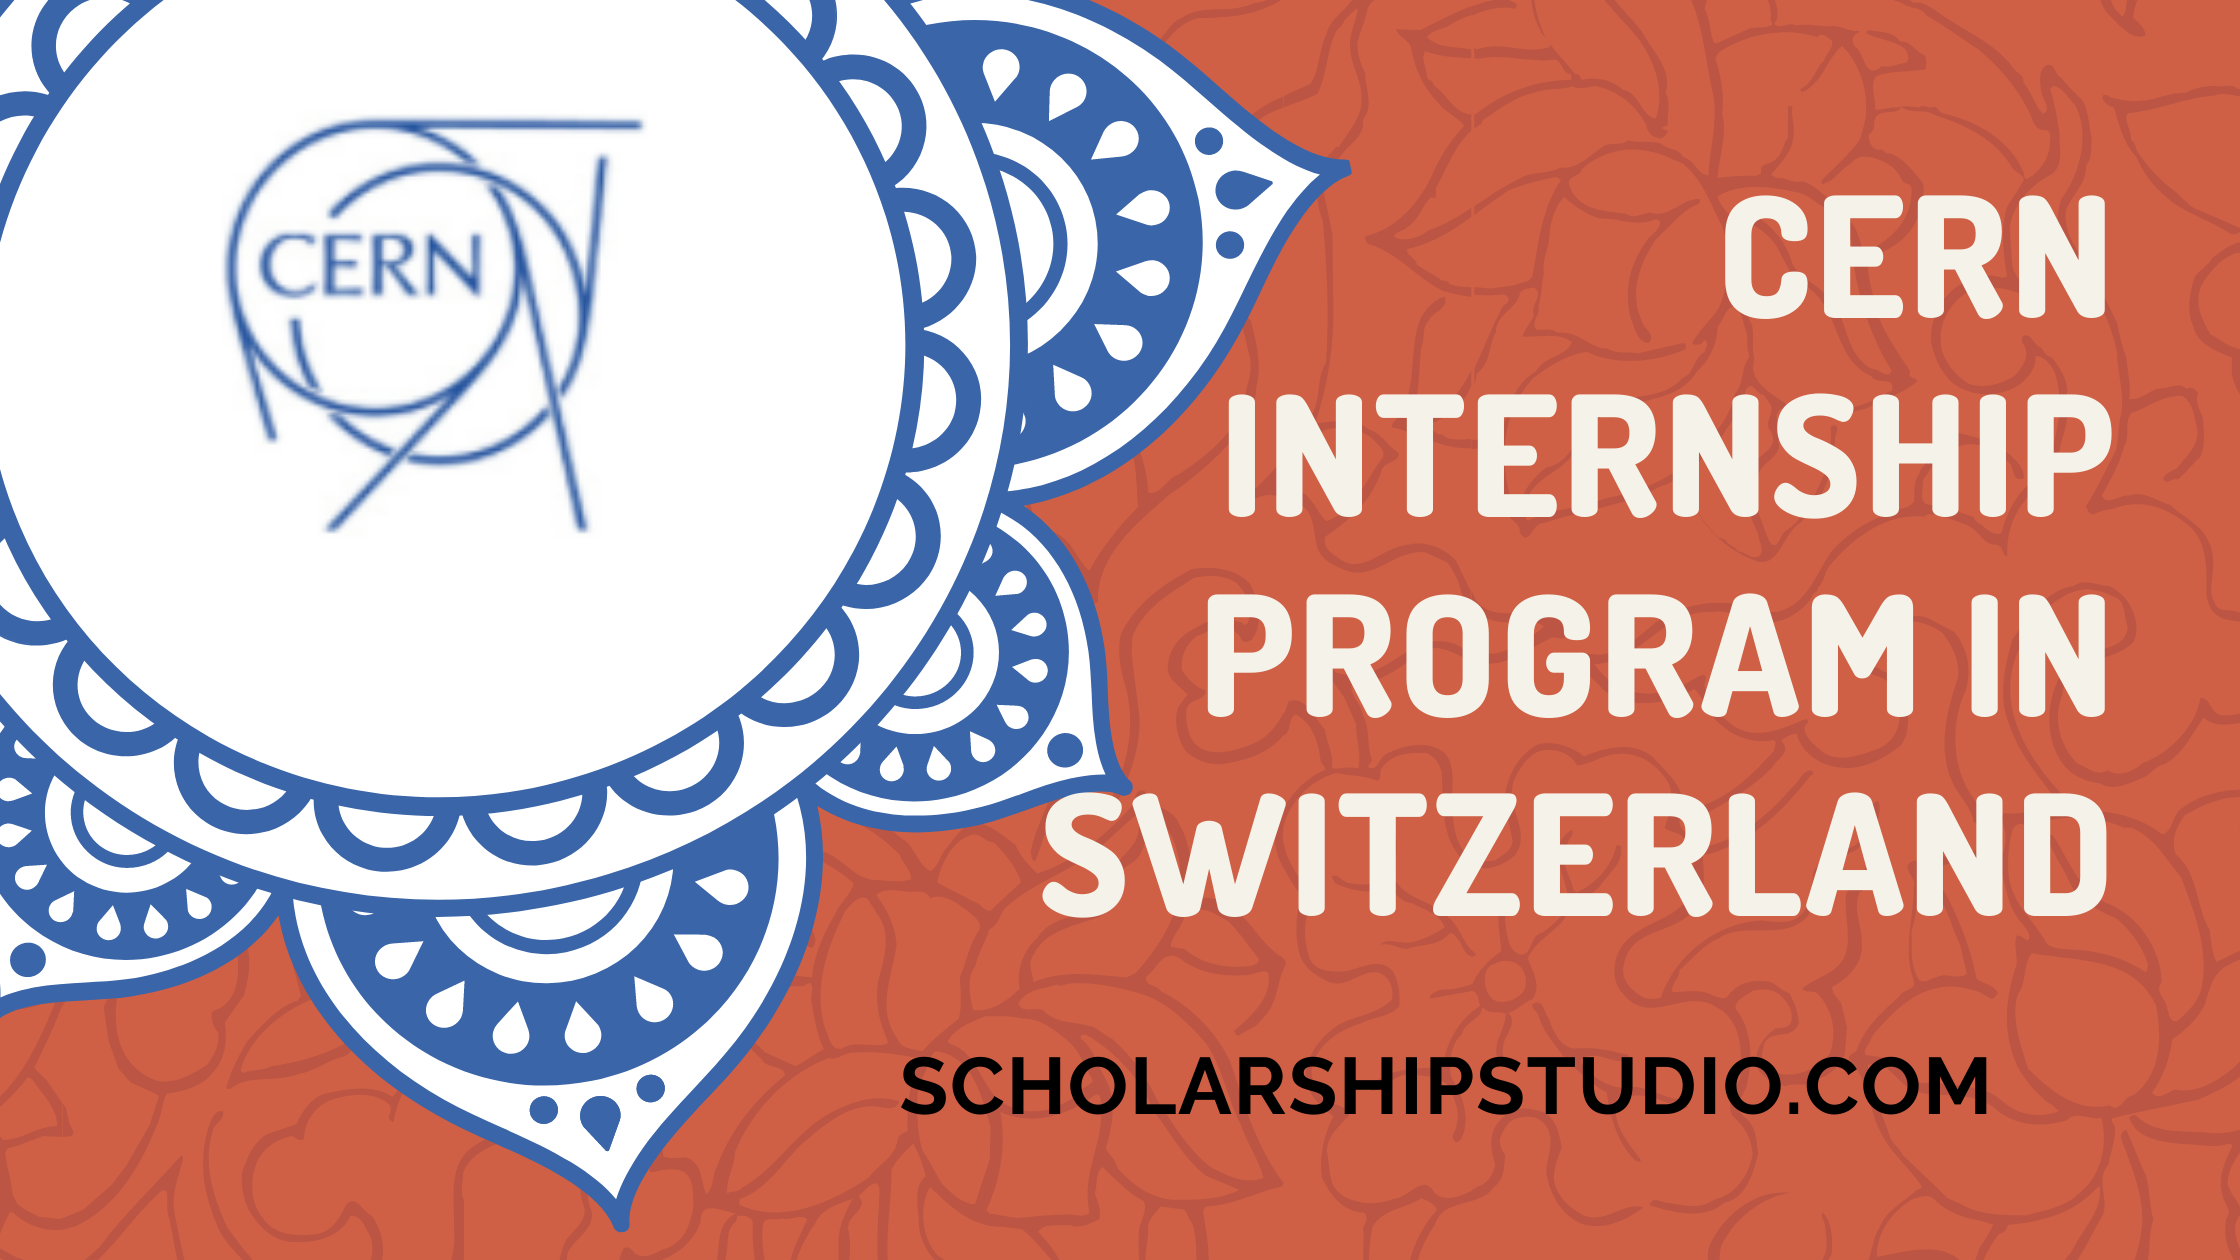 CERN Internship Program in Switzerland Scholarship studio